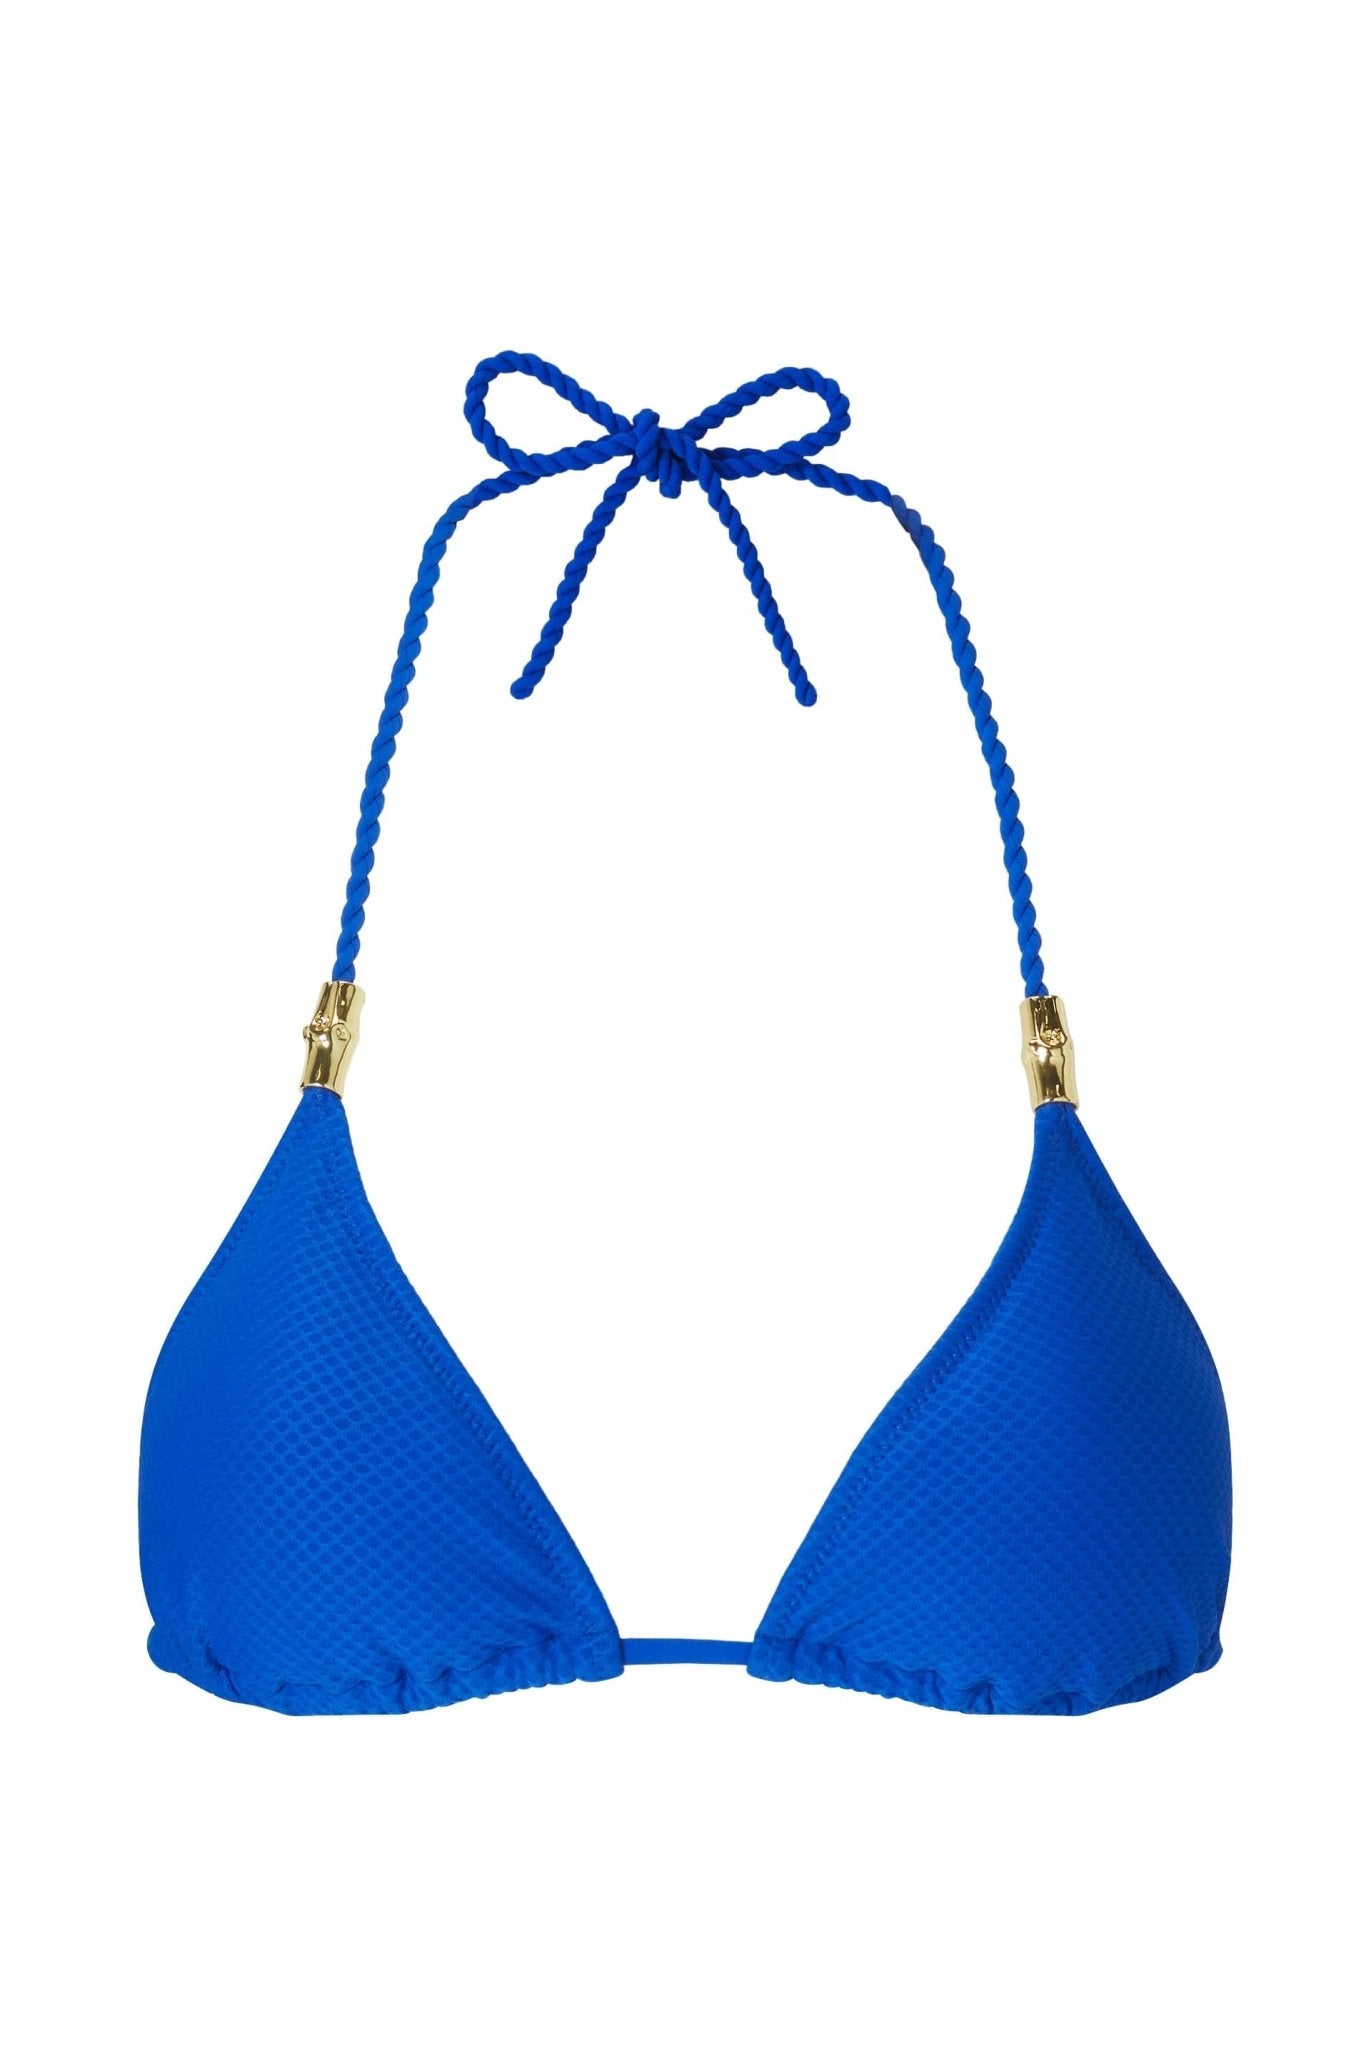 Electric Blue Triangle Bikini Top - Heidi Klein - UK Store